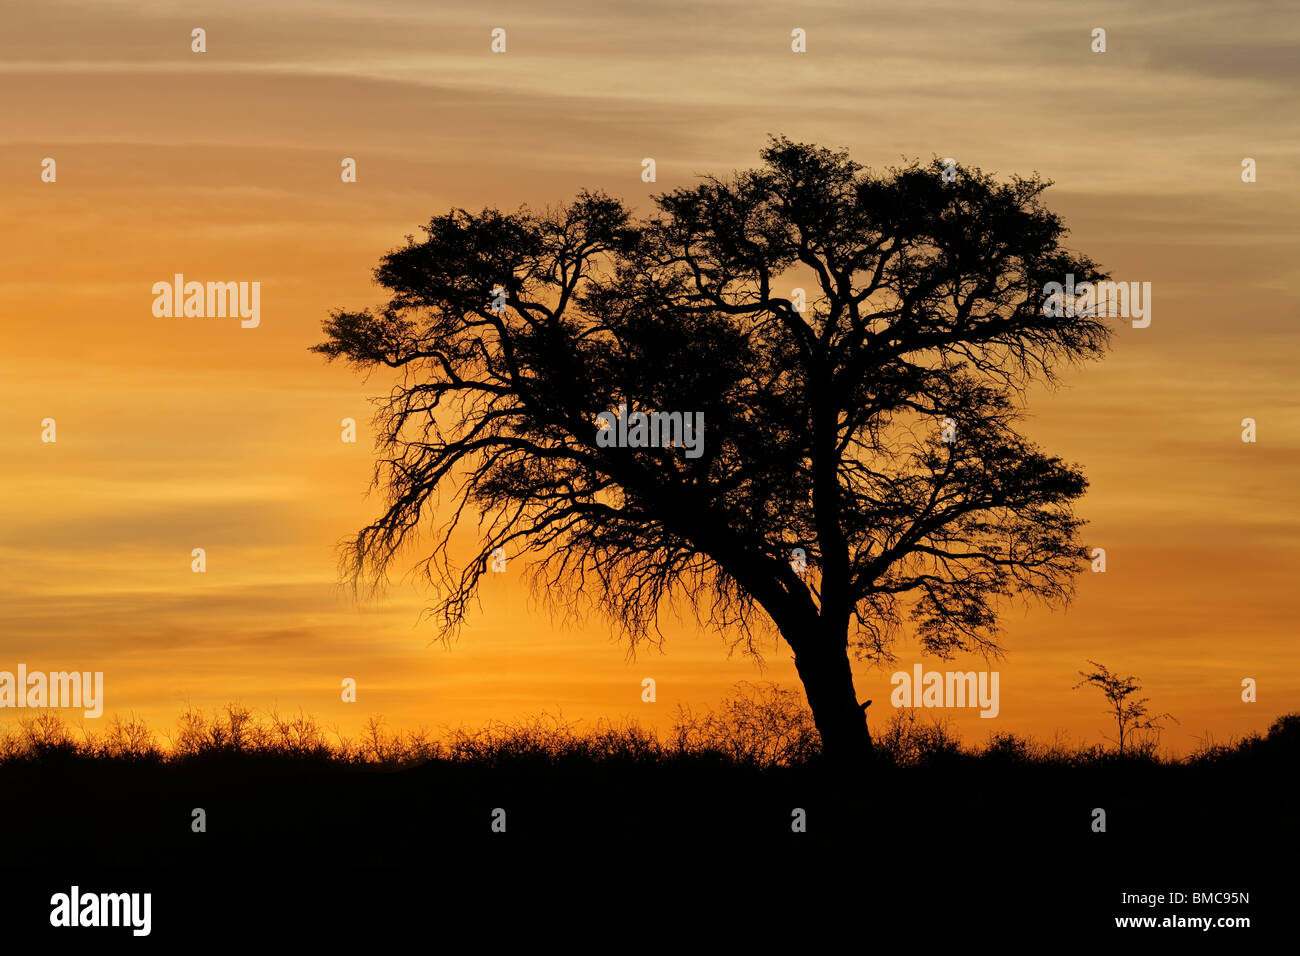 Sunset with silhouetted African Acacia tree, Kalahari desert, South Africa Stock Photo